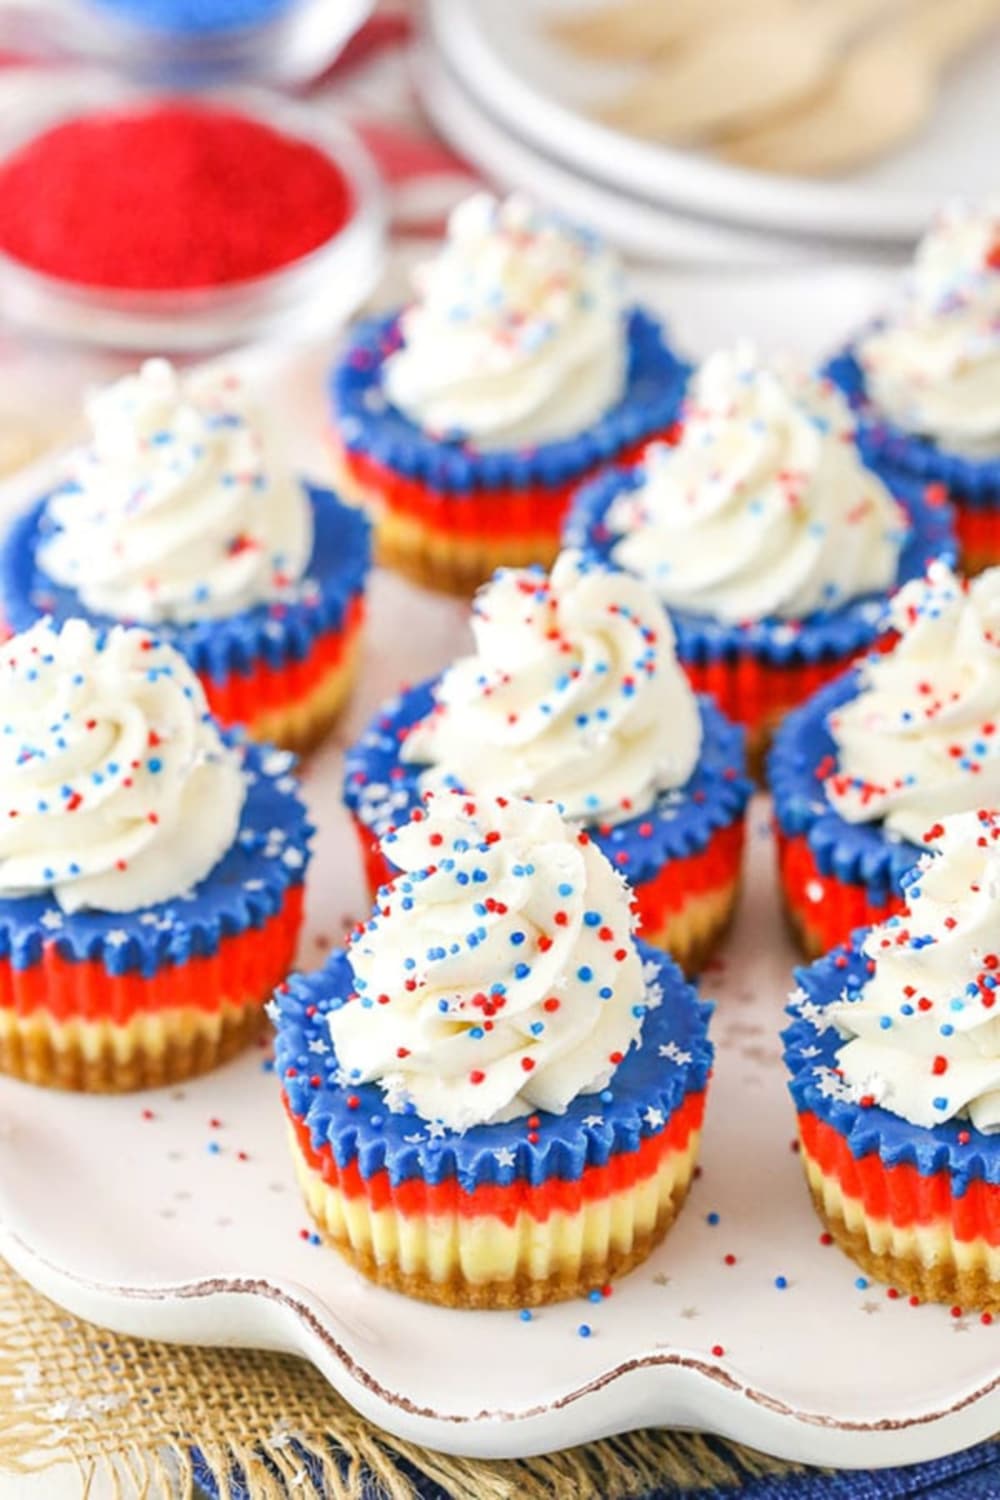 Mini cheesecakes rouges, blancs et bleus